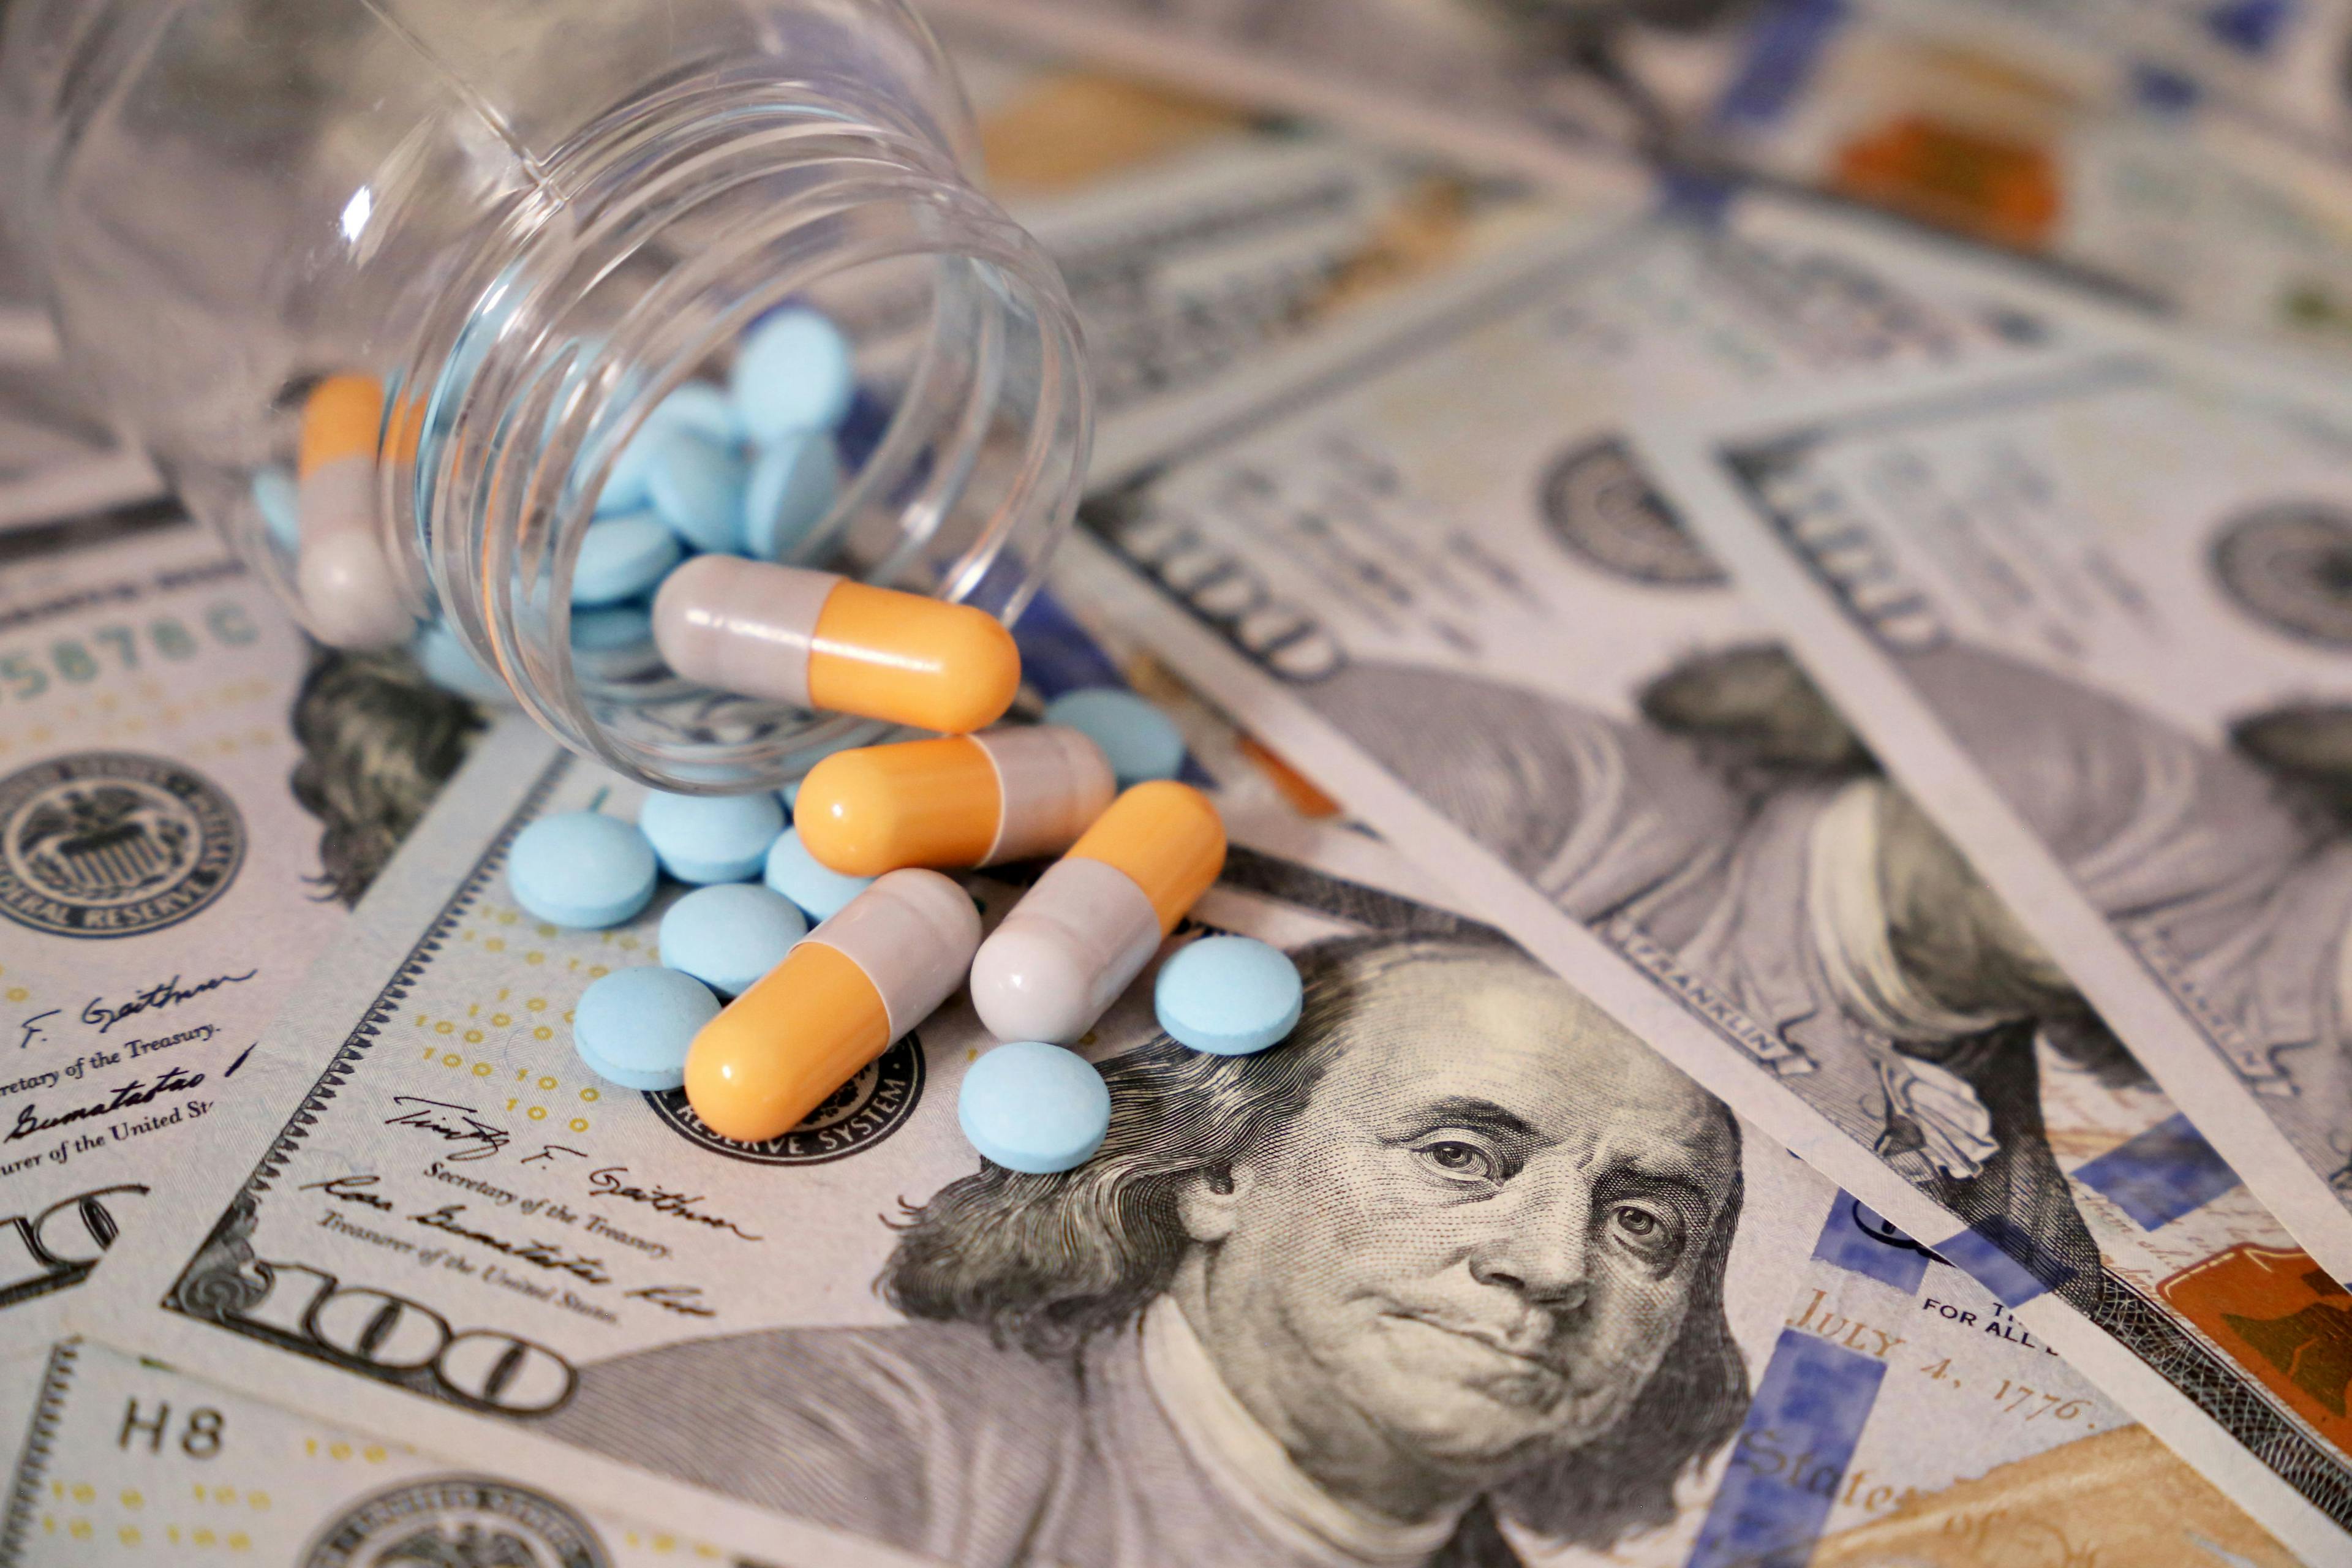 Concept of health care, pharmaceutical business, drug prices, pharmacy, medicine and economics | Image Credit: Oleg - stock.adobe.com